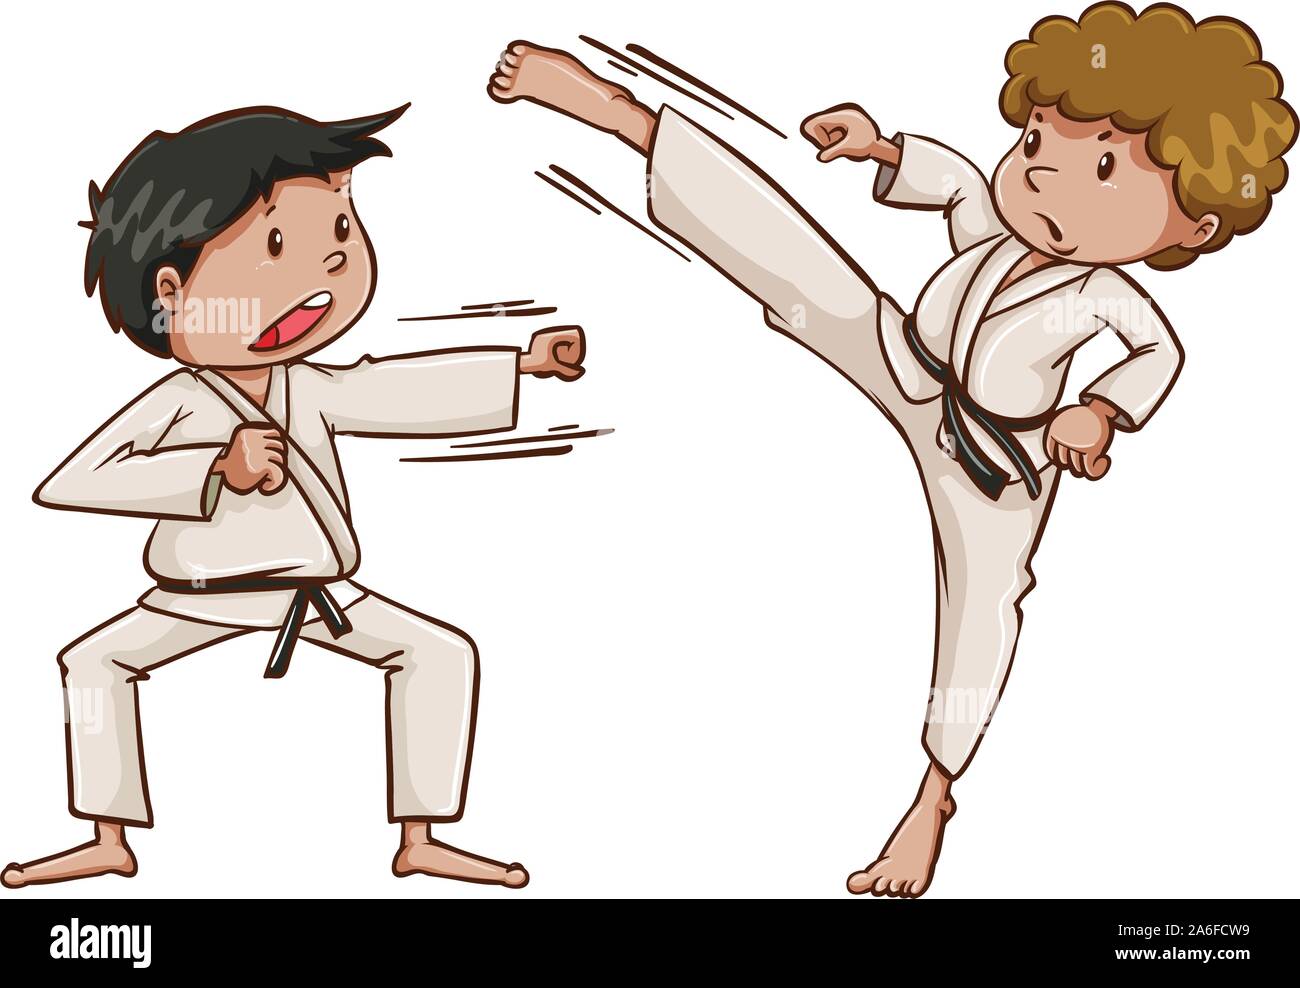 kids karate clip art